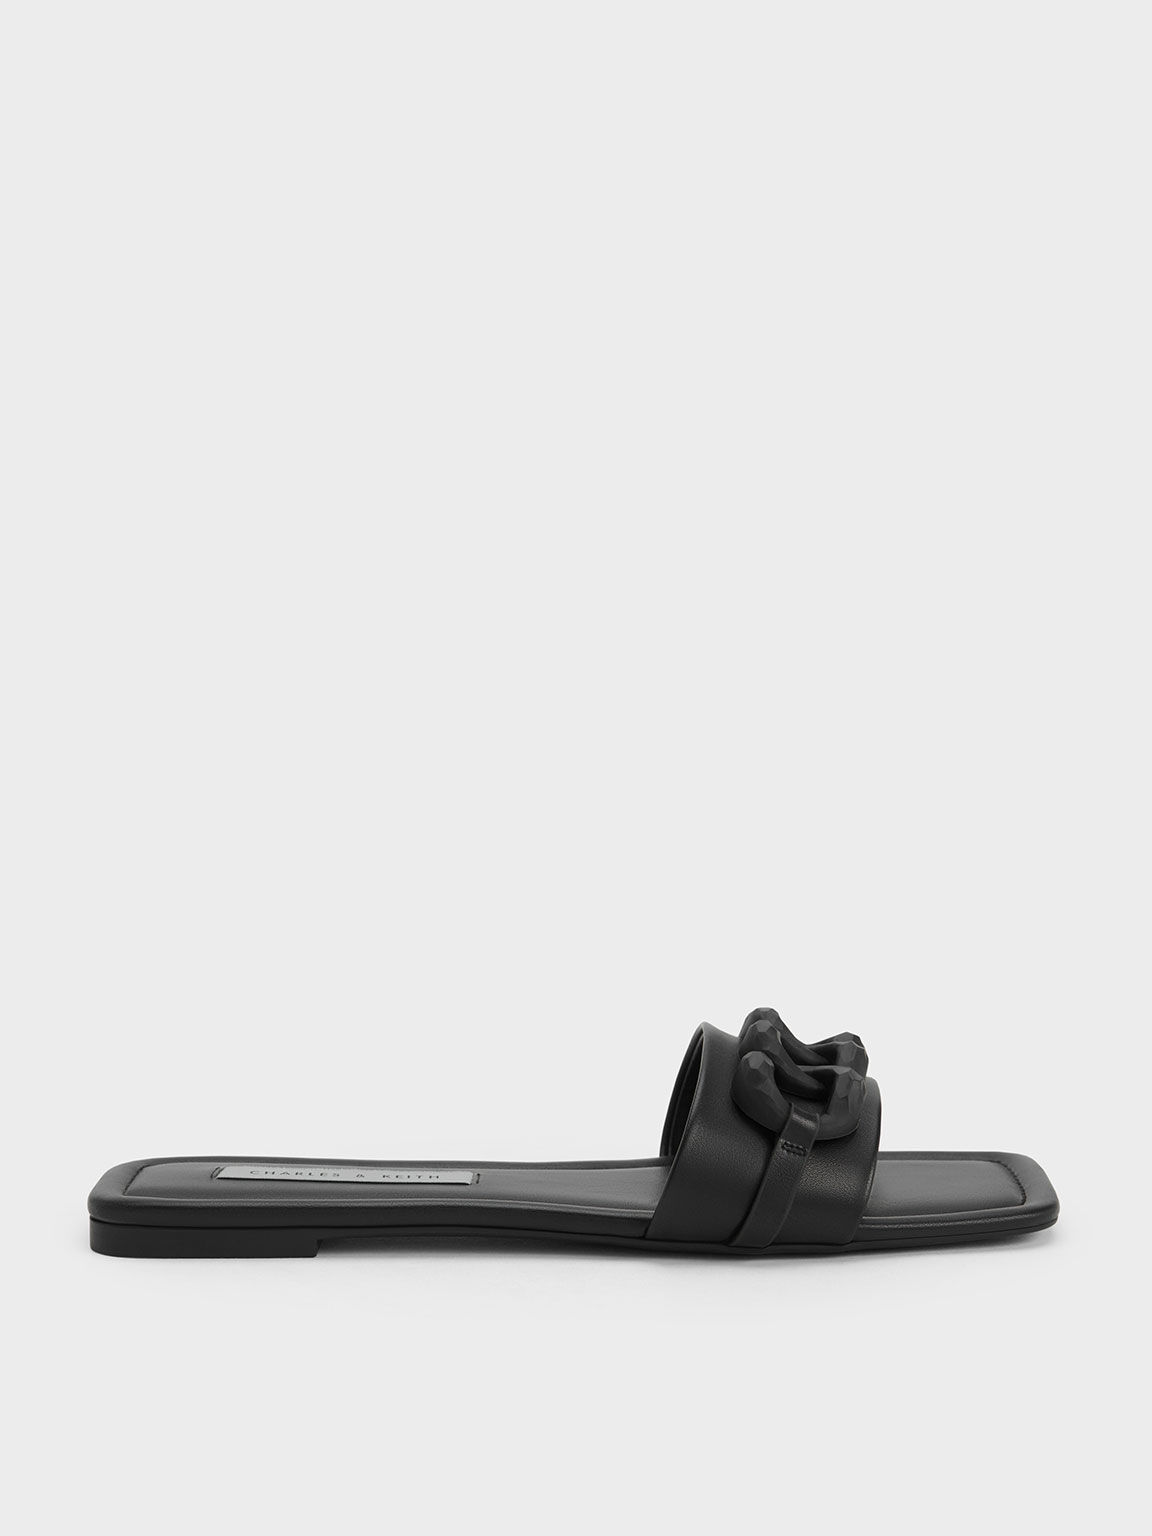 Black Sandal Slide Chunky Chain-Link, Black, hi-res